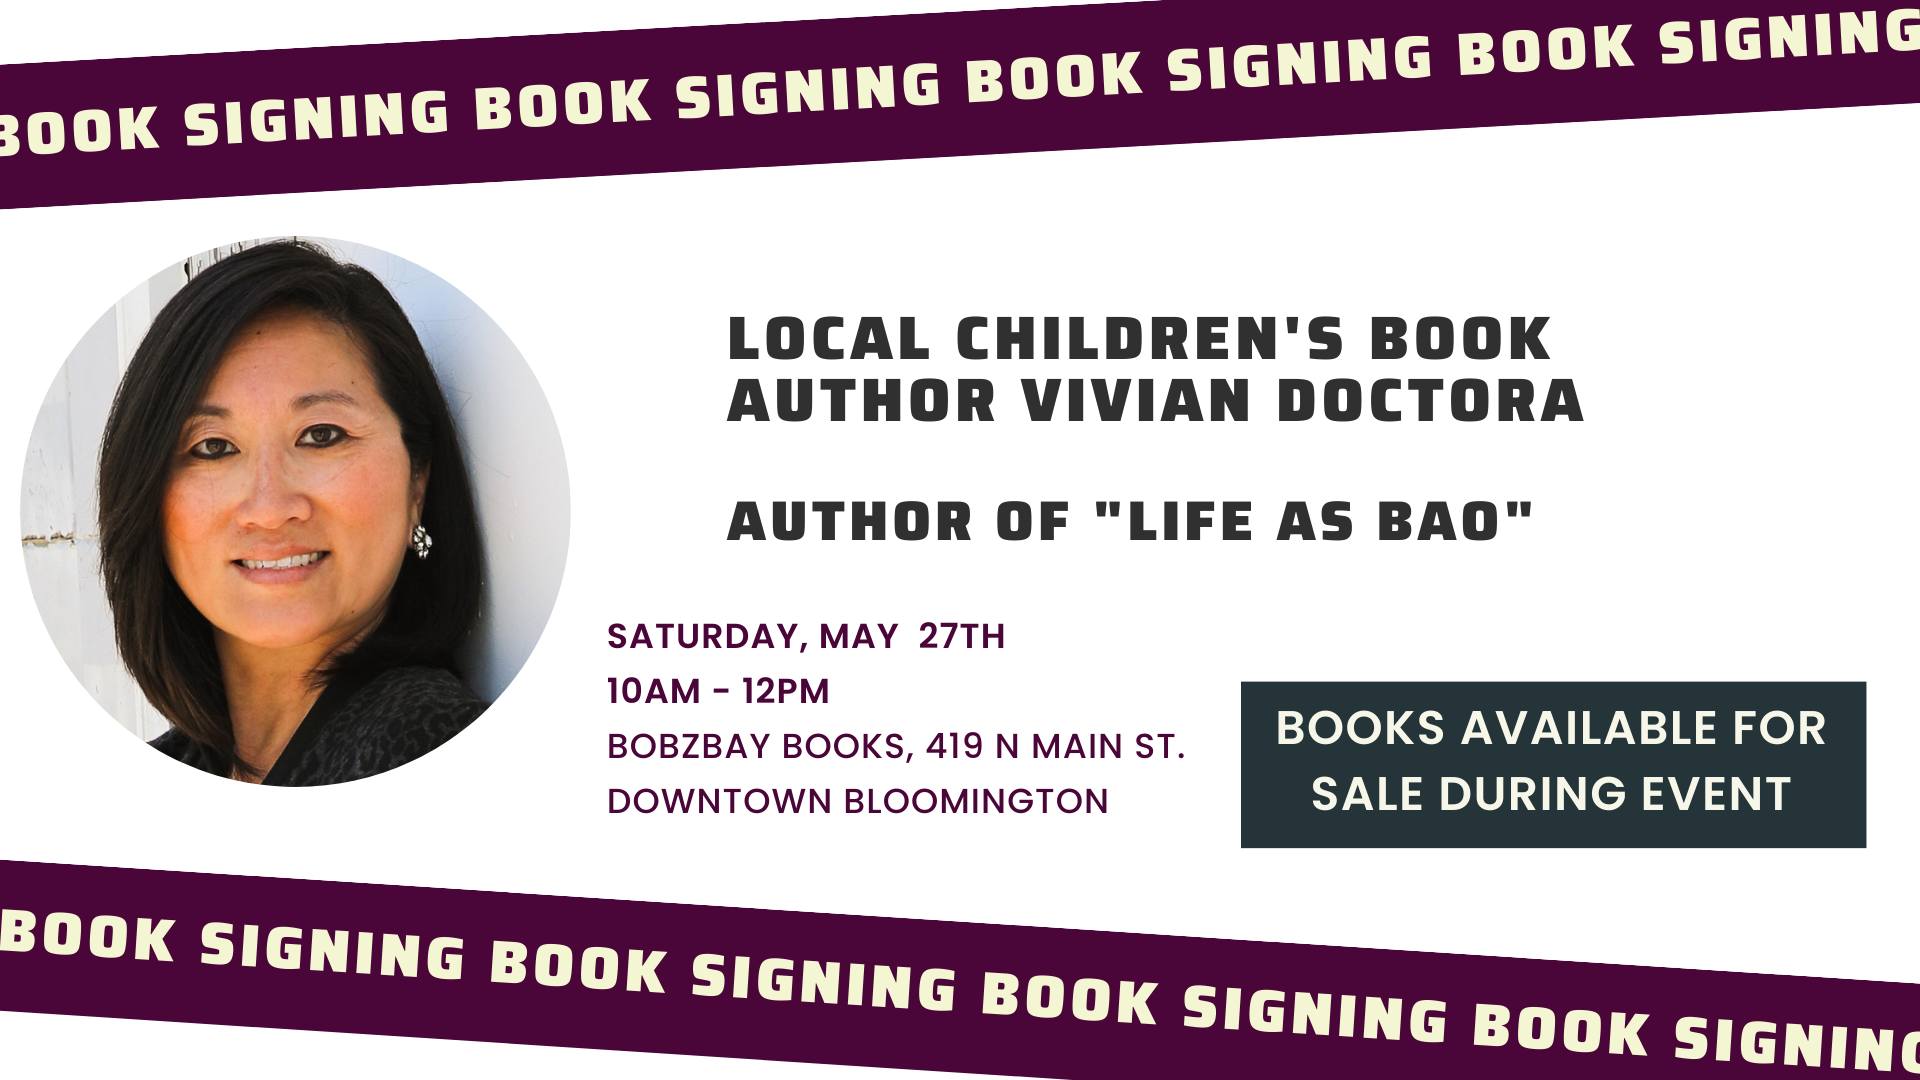 Local Children's Book Author Vivian Doctora Book Signing at Bobzbay Books